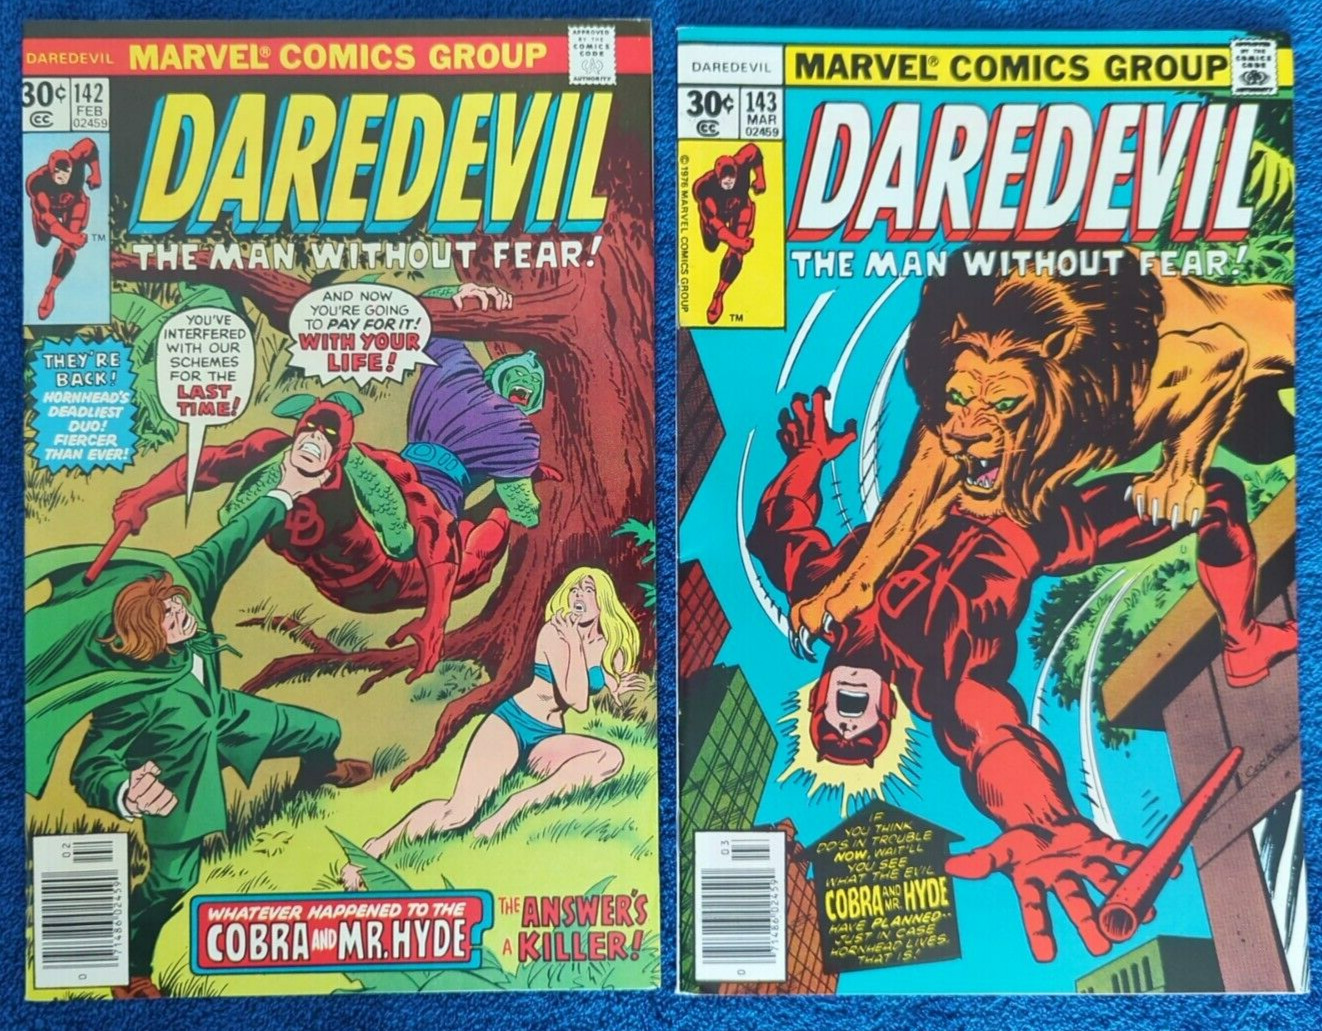 DAREDEVIL #142 & 143. MARVEL. 1977. COBRA AND HYDE 9.4 NEAR MINT QUALITY